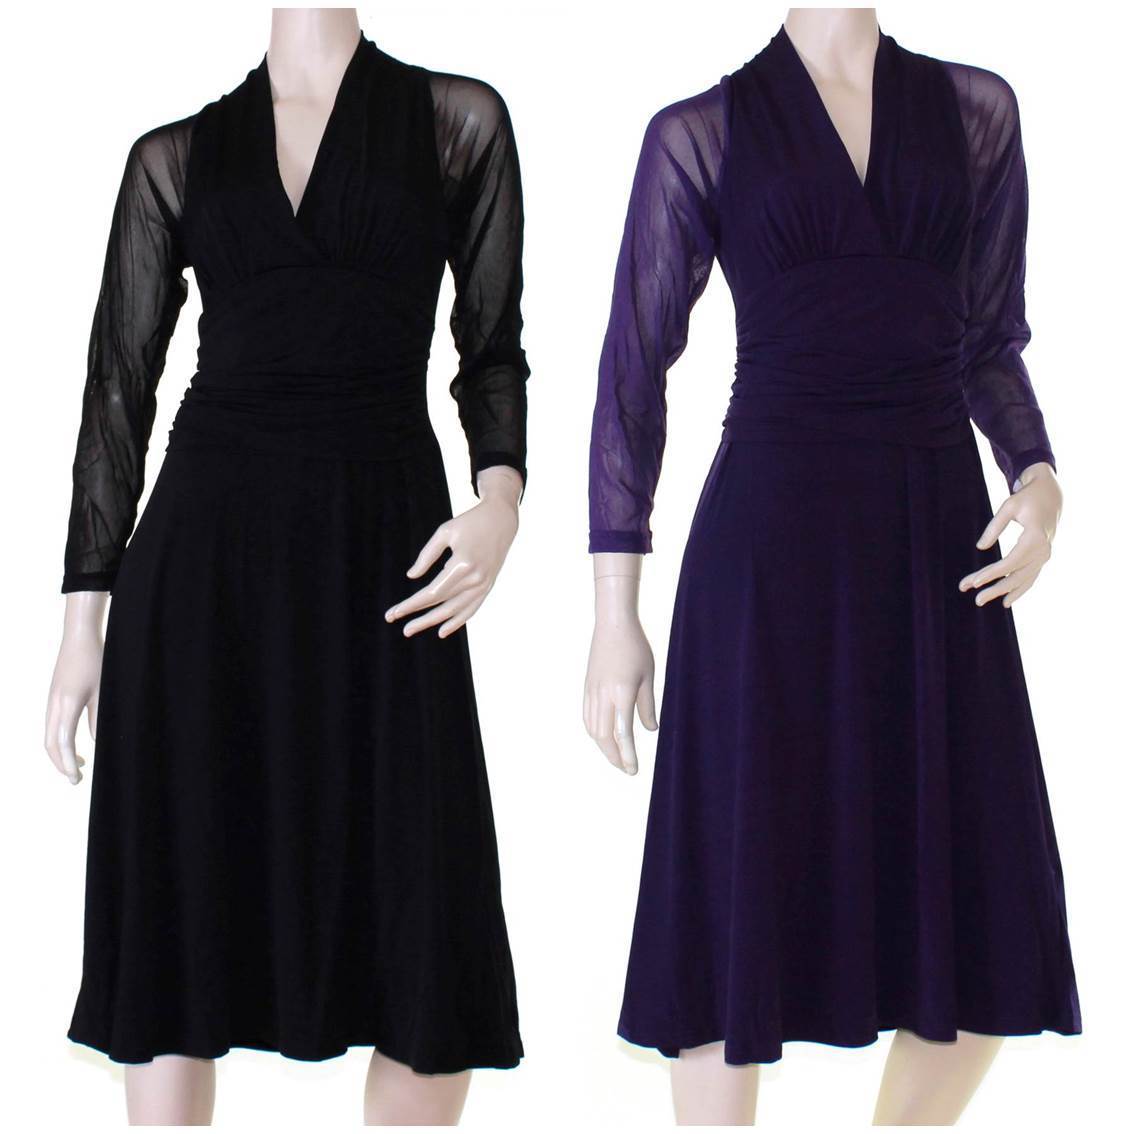 black and lavender dress